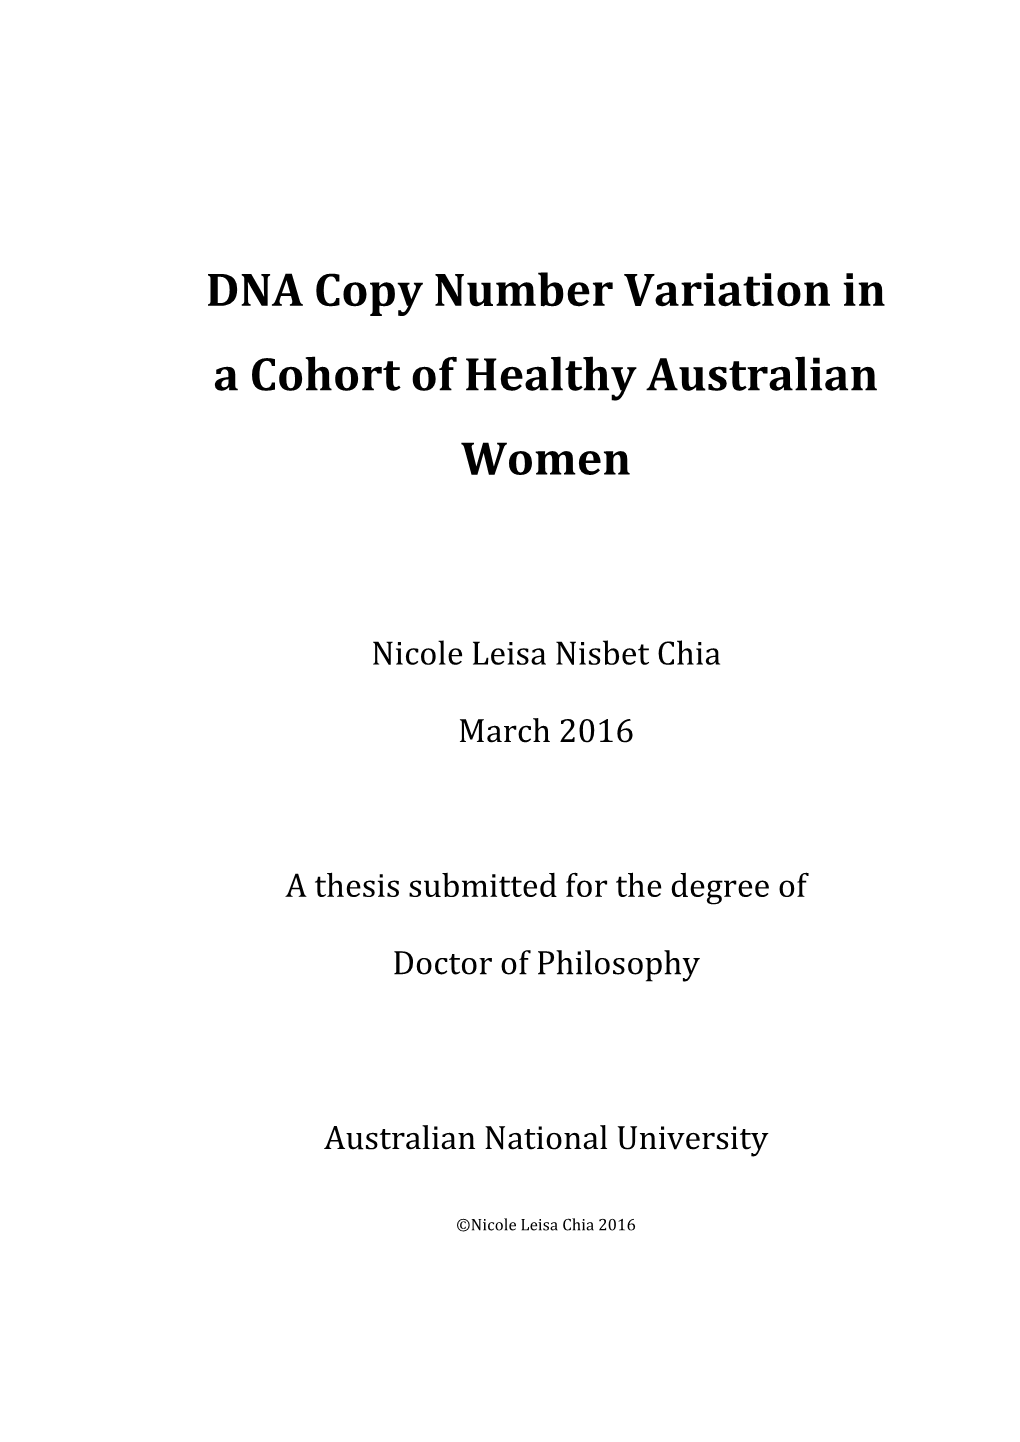 DNA Copy Number Variation in a Cohort of Healthy Australian Women